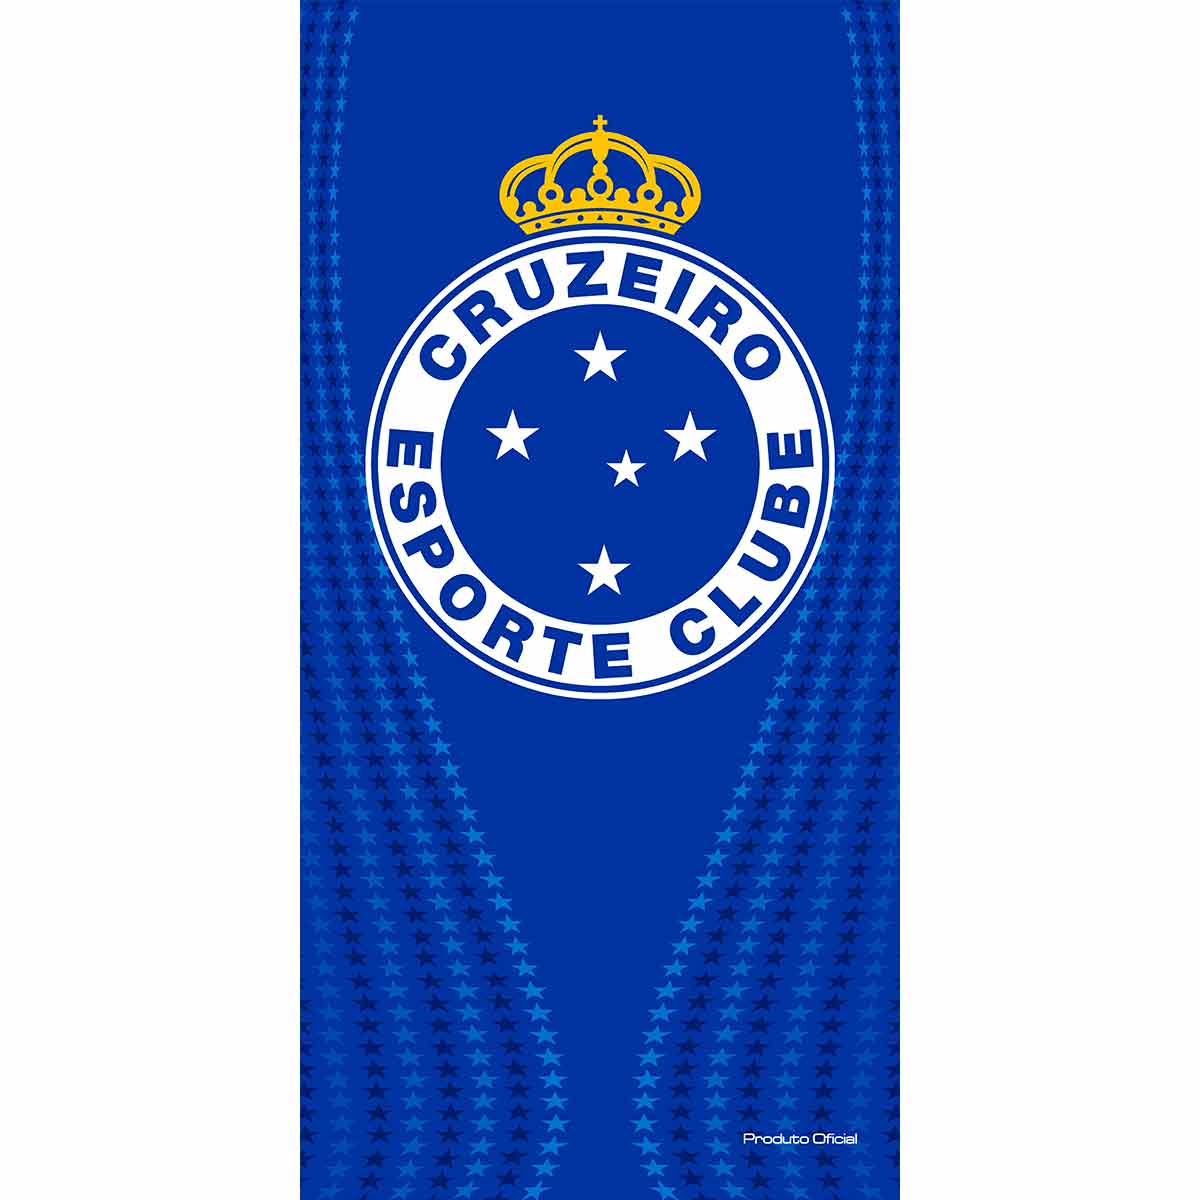 Toalha De Banho De Times De Futebol Aveludada Estampada 70x140cm Buettner Licenciada Brasao Cruzeiro 2019 Lojabuettner